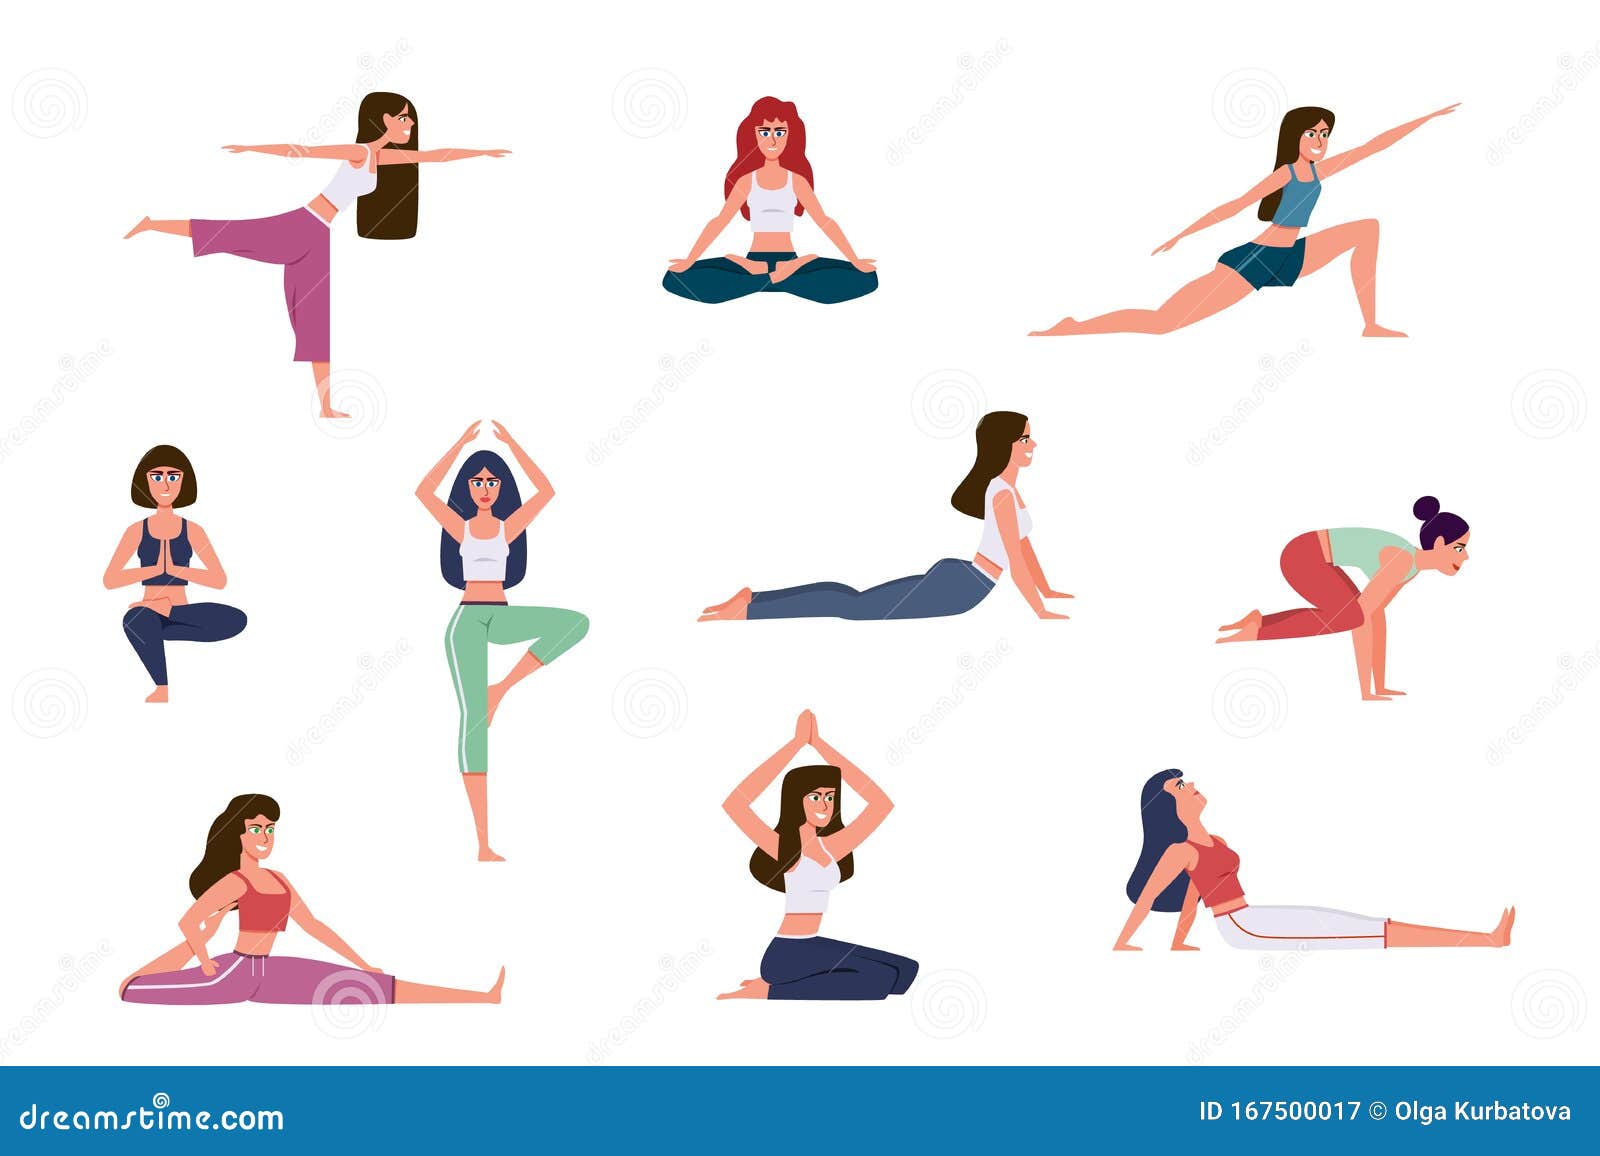 Warm up and Hip Opening Yoga Poses | Learn Yoga with Urmi Pandya - YouTube